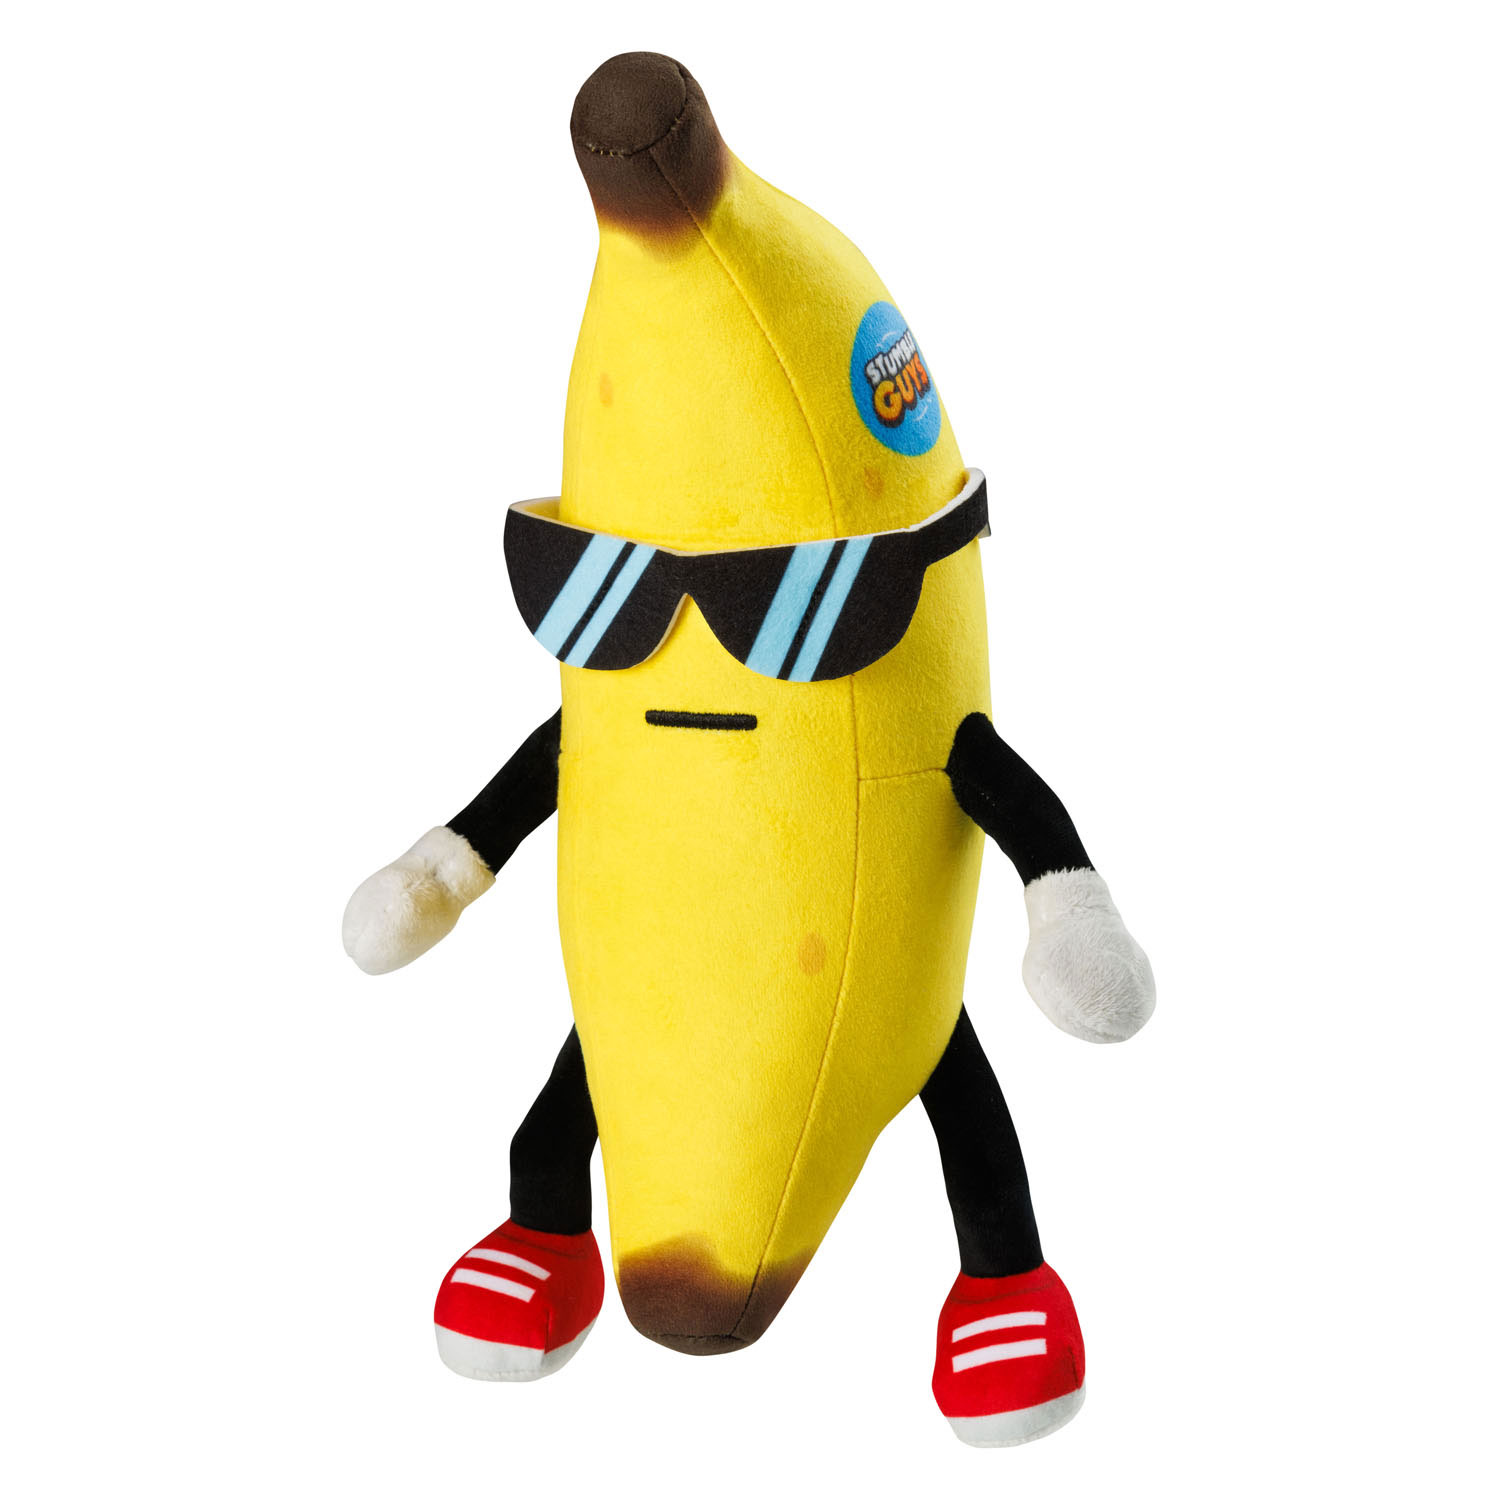 Stumble Guys Knuffel Pluche - Banana Guy, 20cm